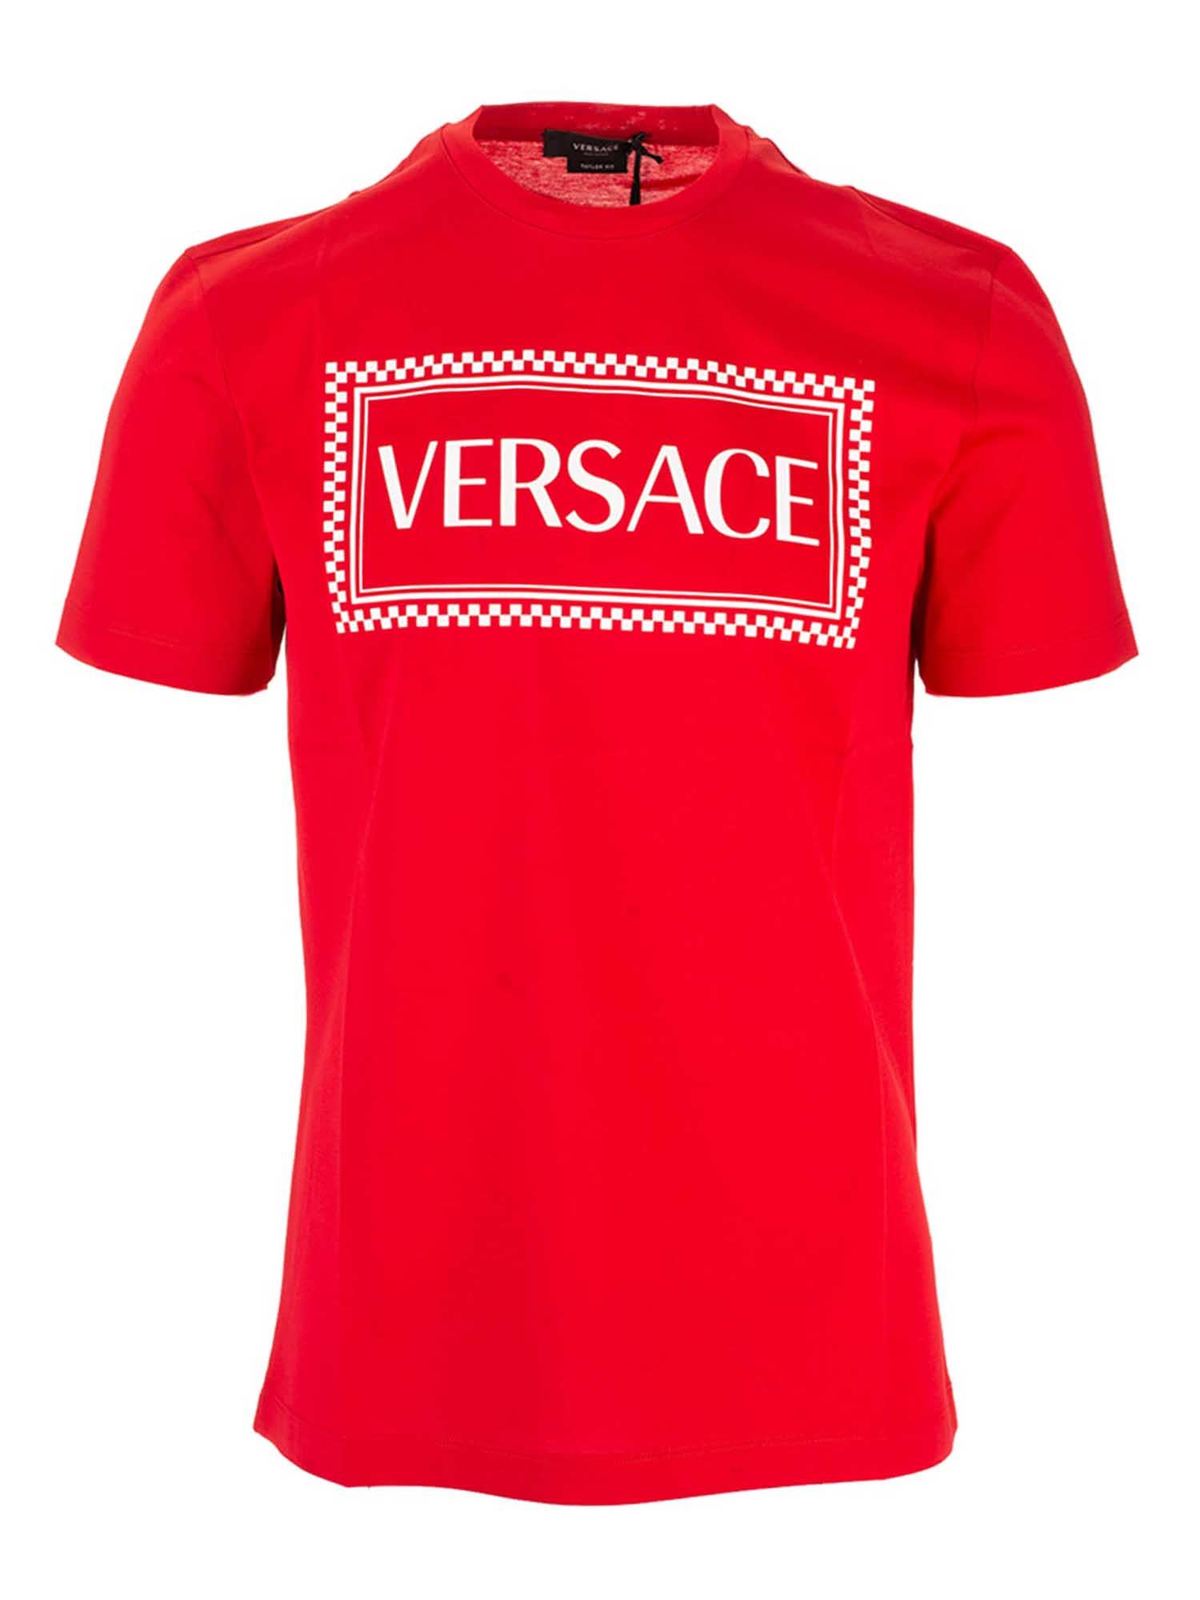 Red Versace Shirt Store, 52% OFF | www.vetyvet.com